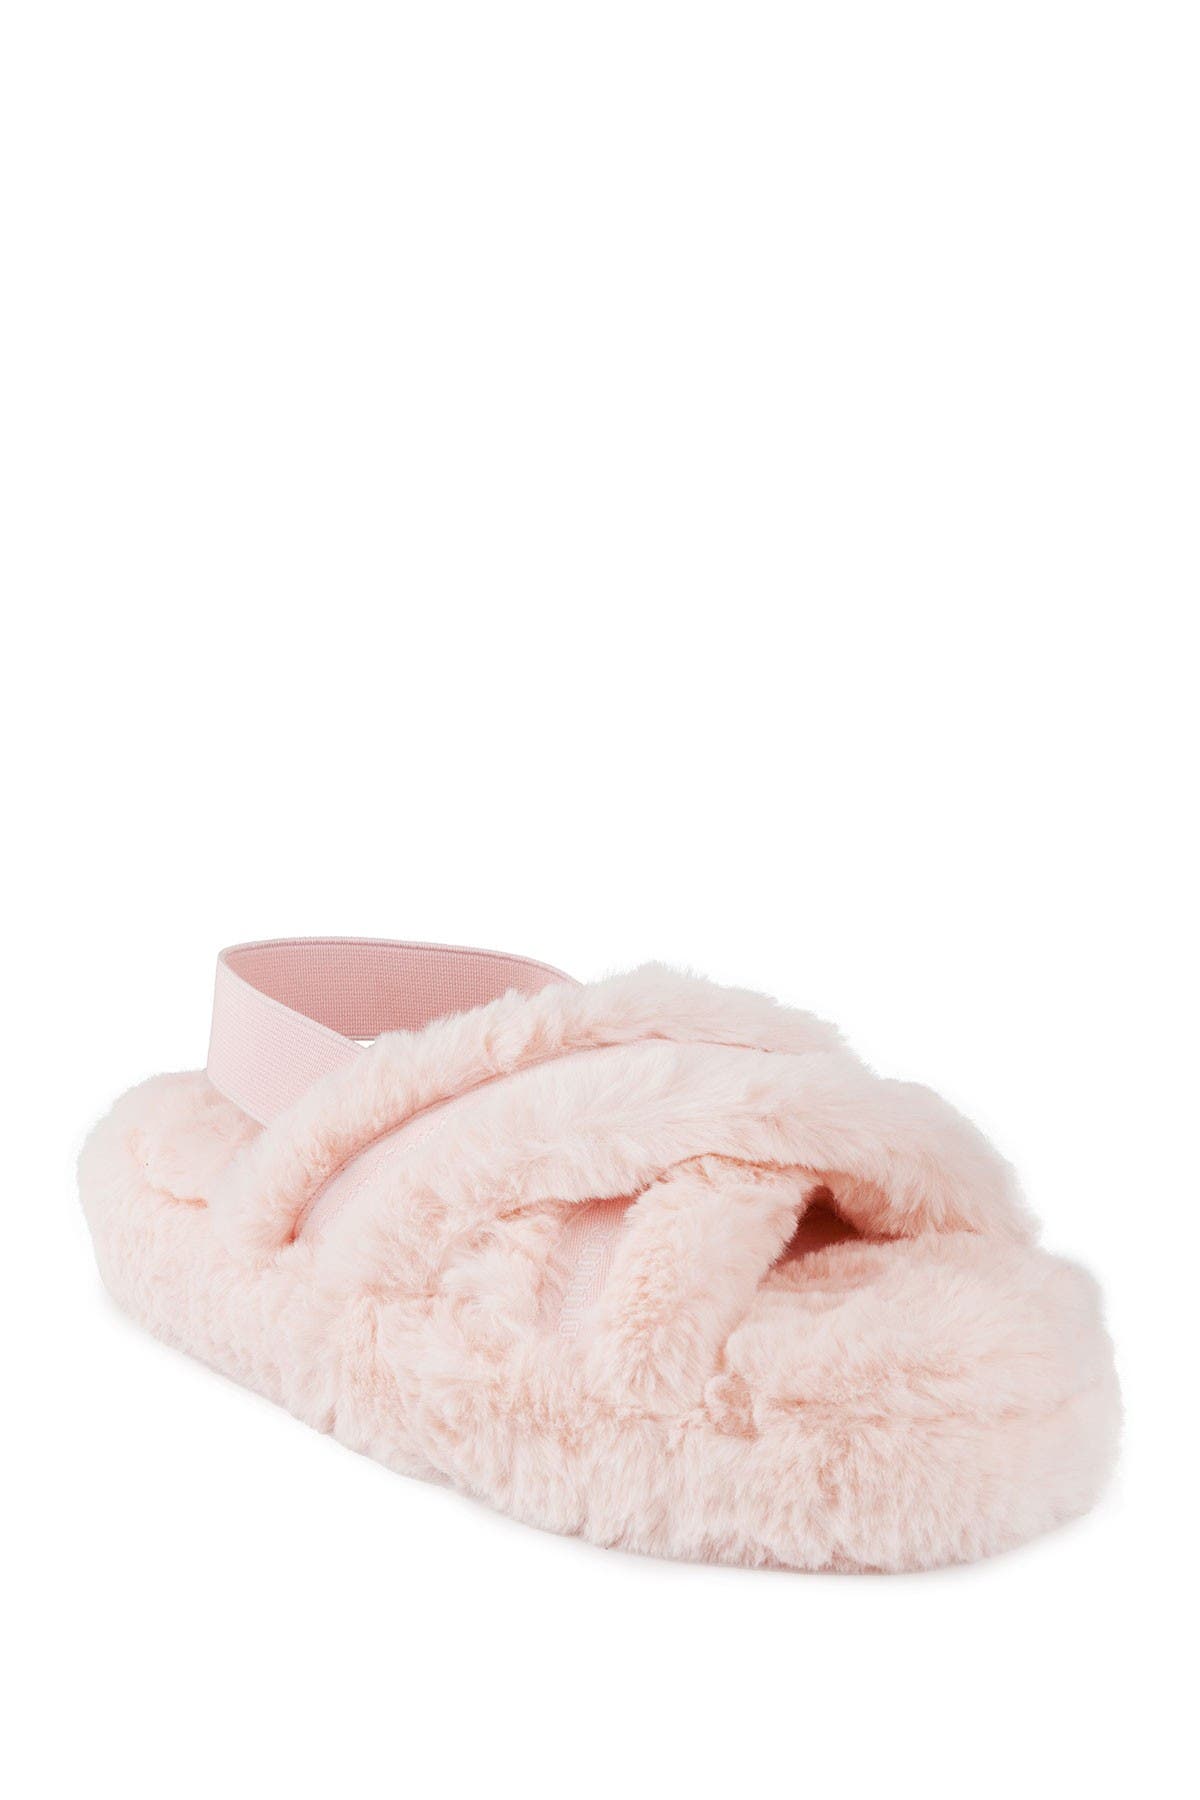 goody bedroom slippers